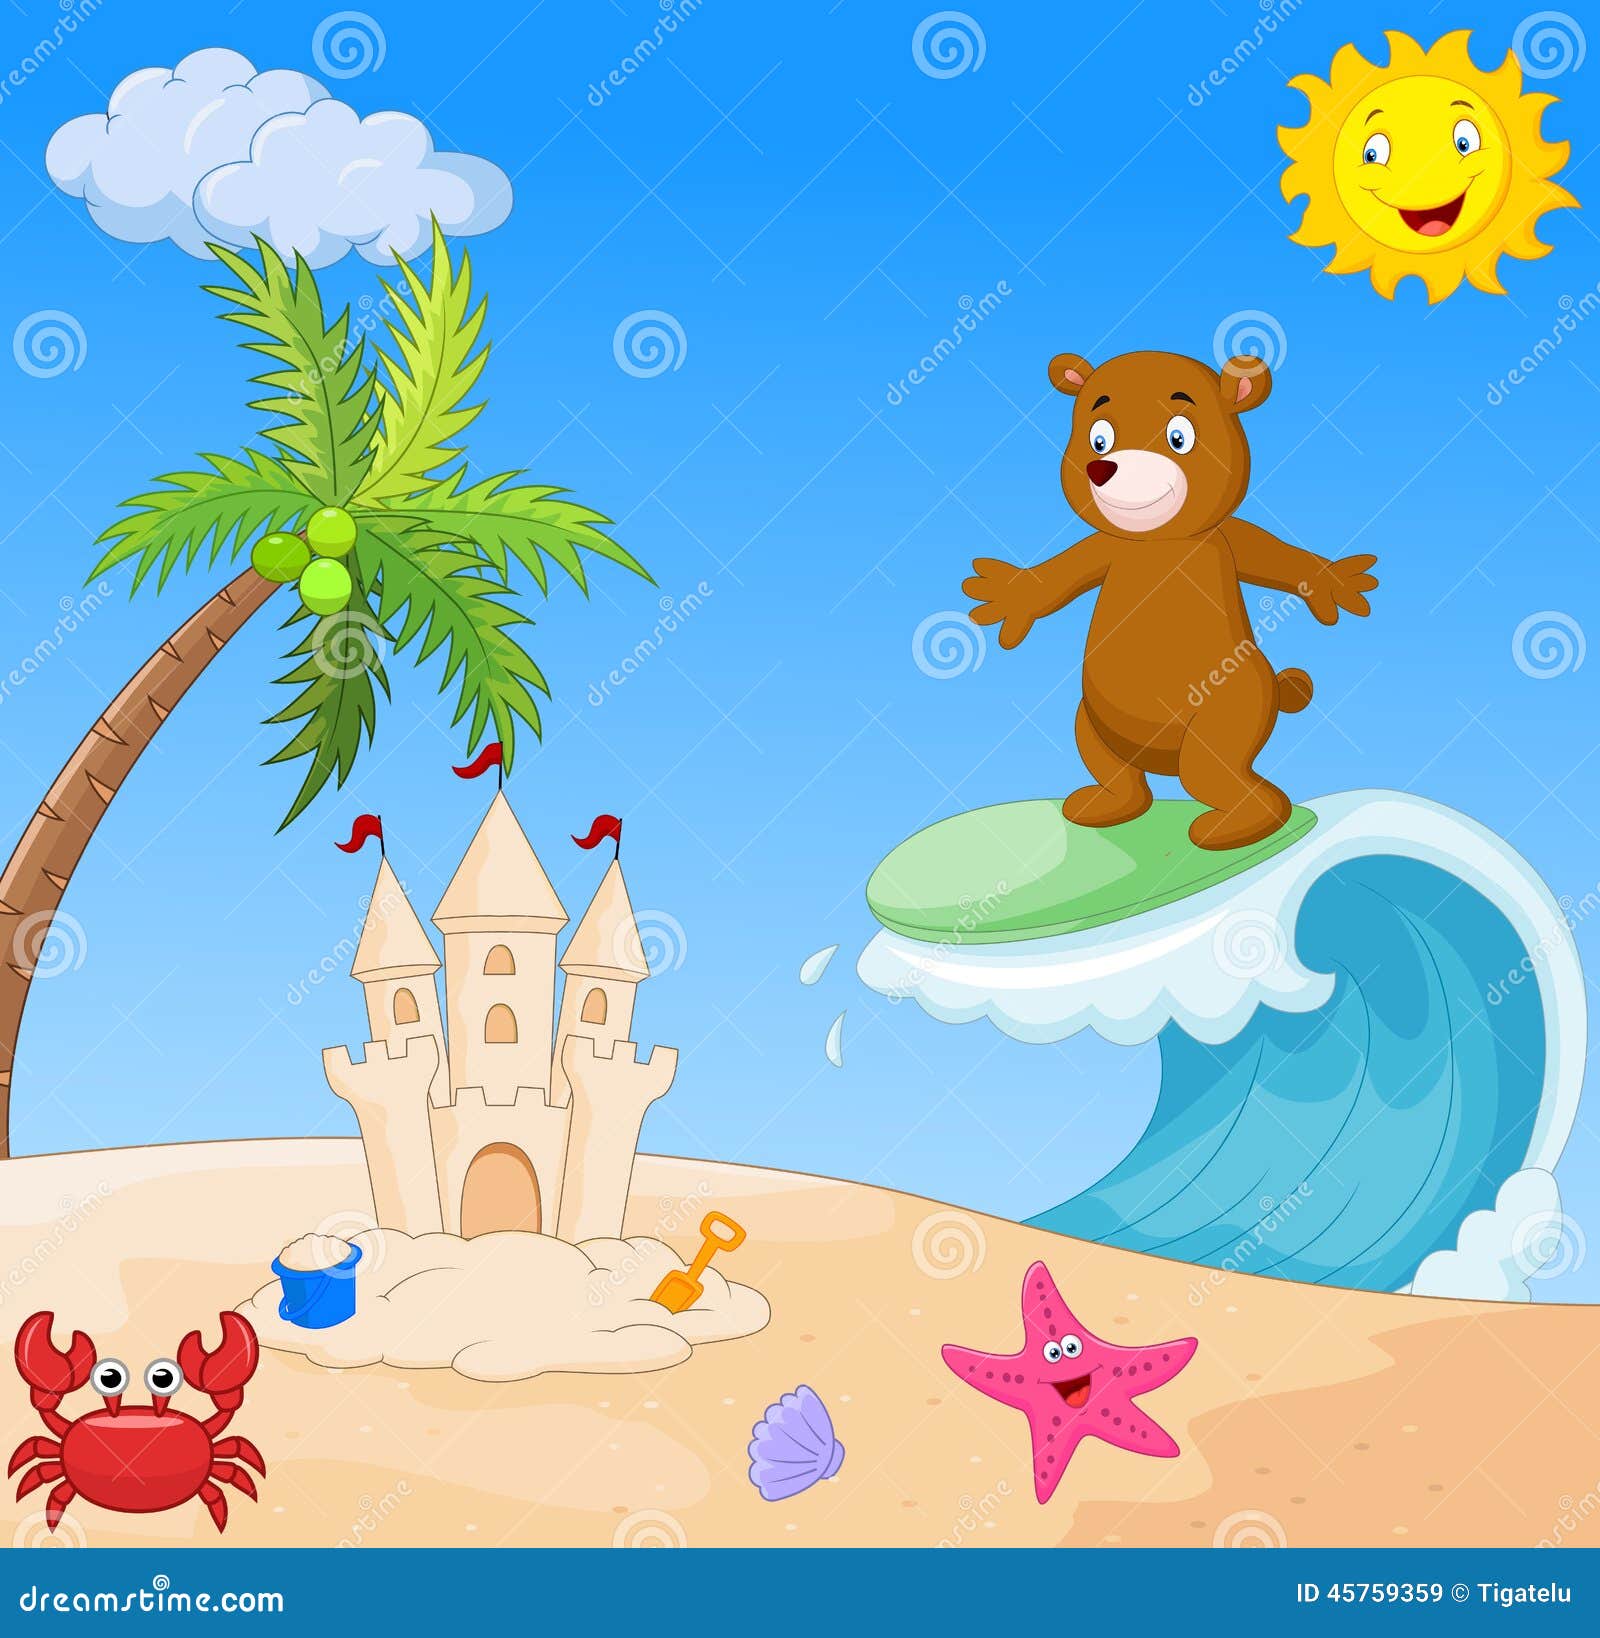 Illustration of Happy bear cartoon surfing